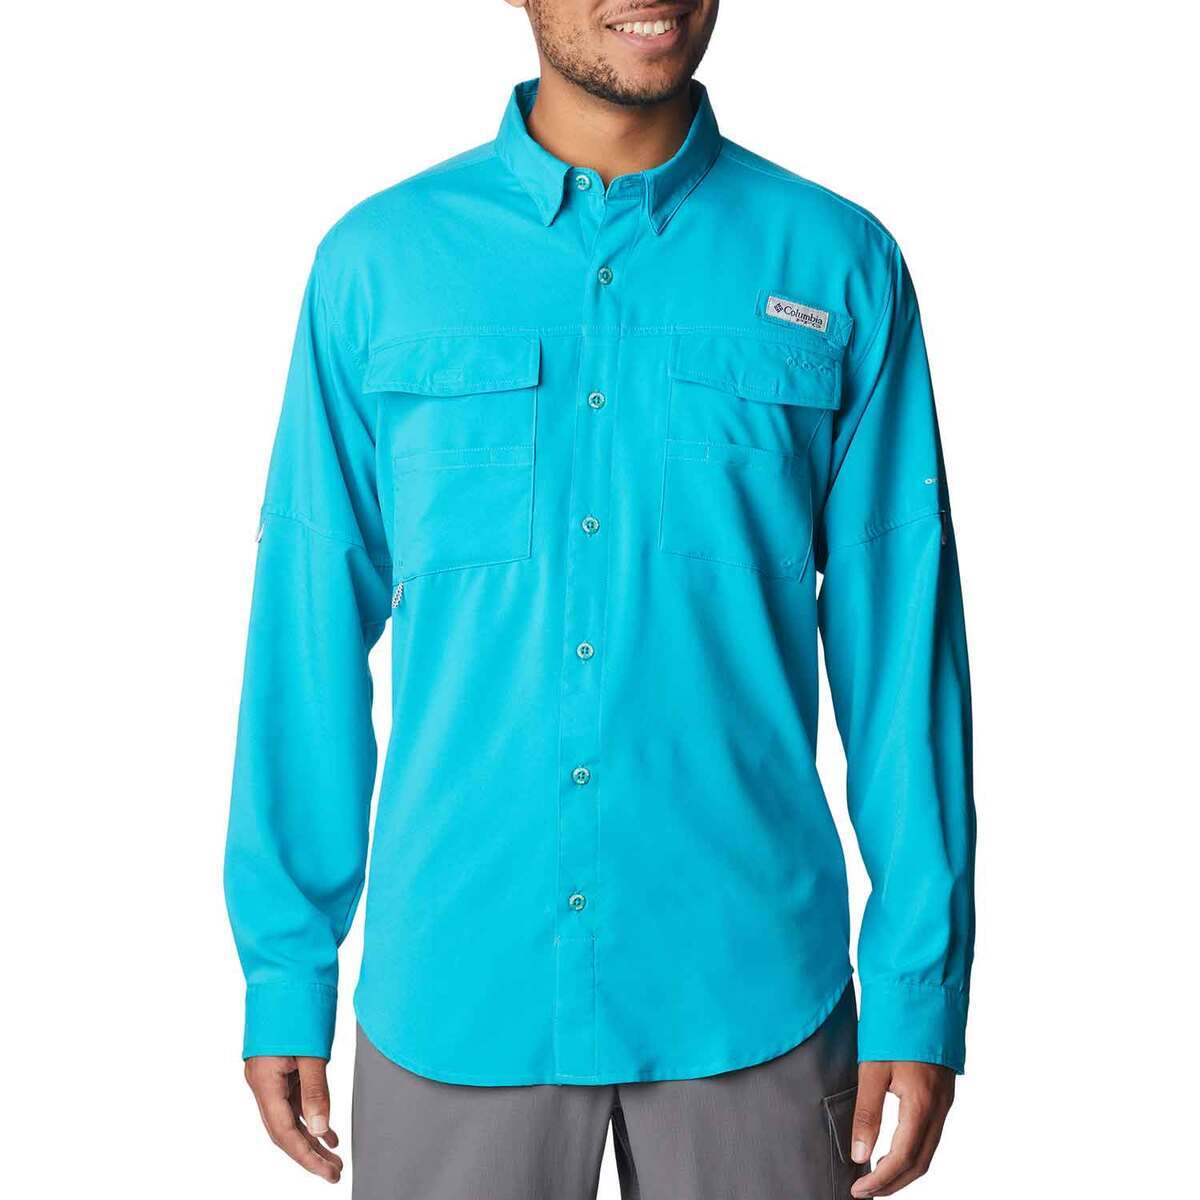 Columbia Fishing Lure Print Short Sleeve Oxford Button Up Shirt Mens XL